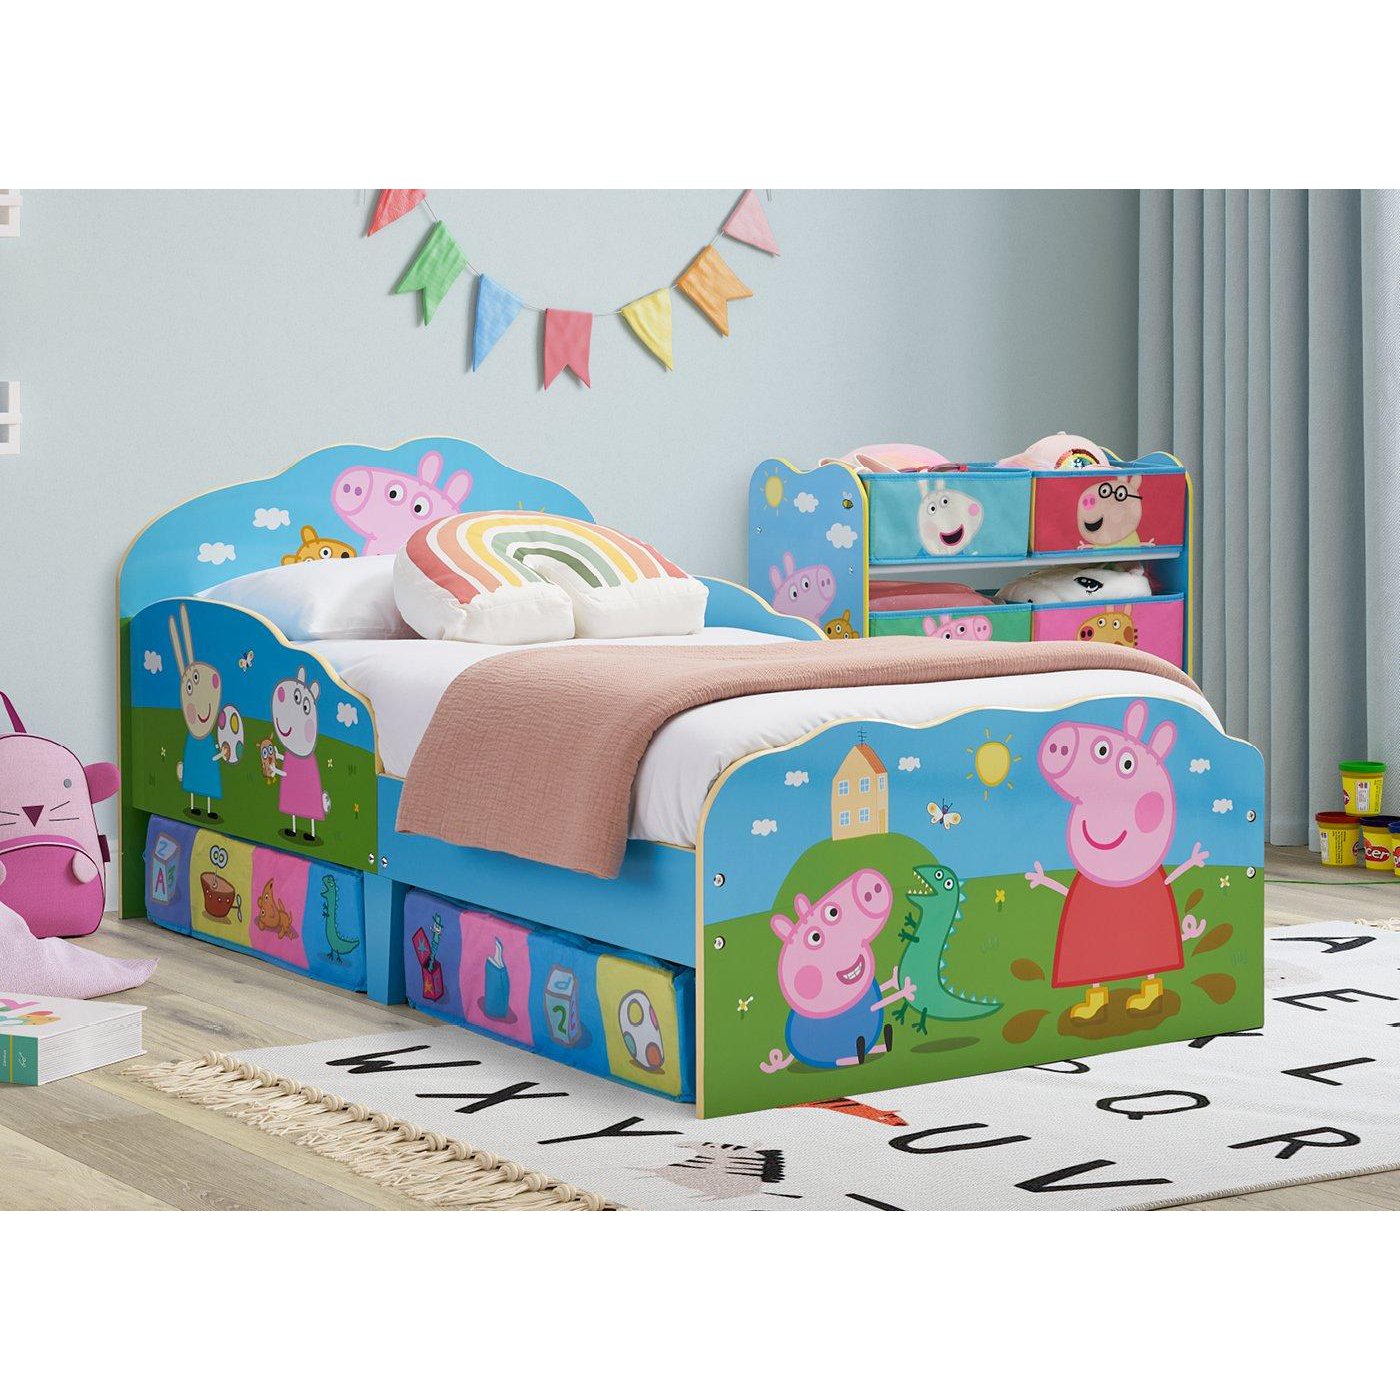 Peppa Pig Toddler Bed Fully Sprung Mattress